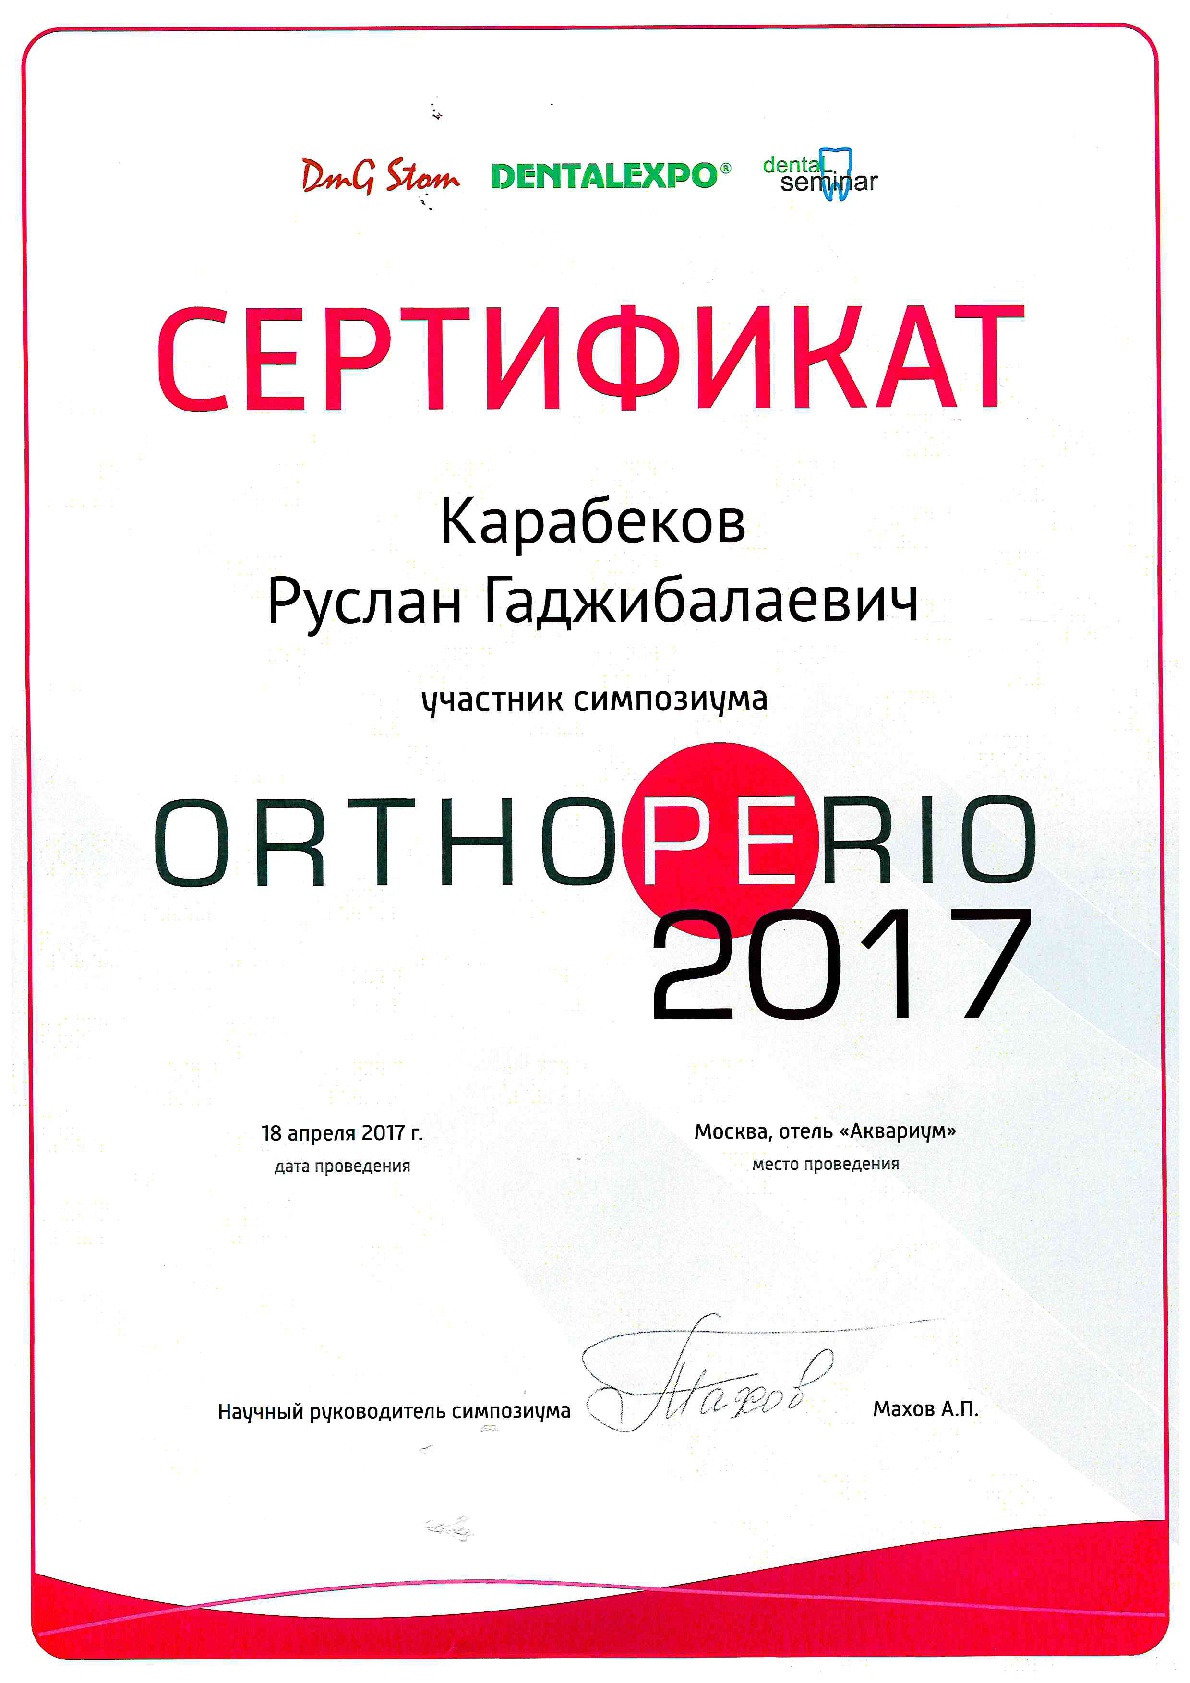 2017 участник симпозиума orthoperio